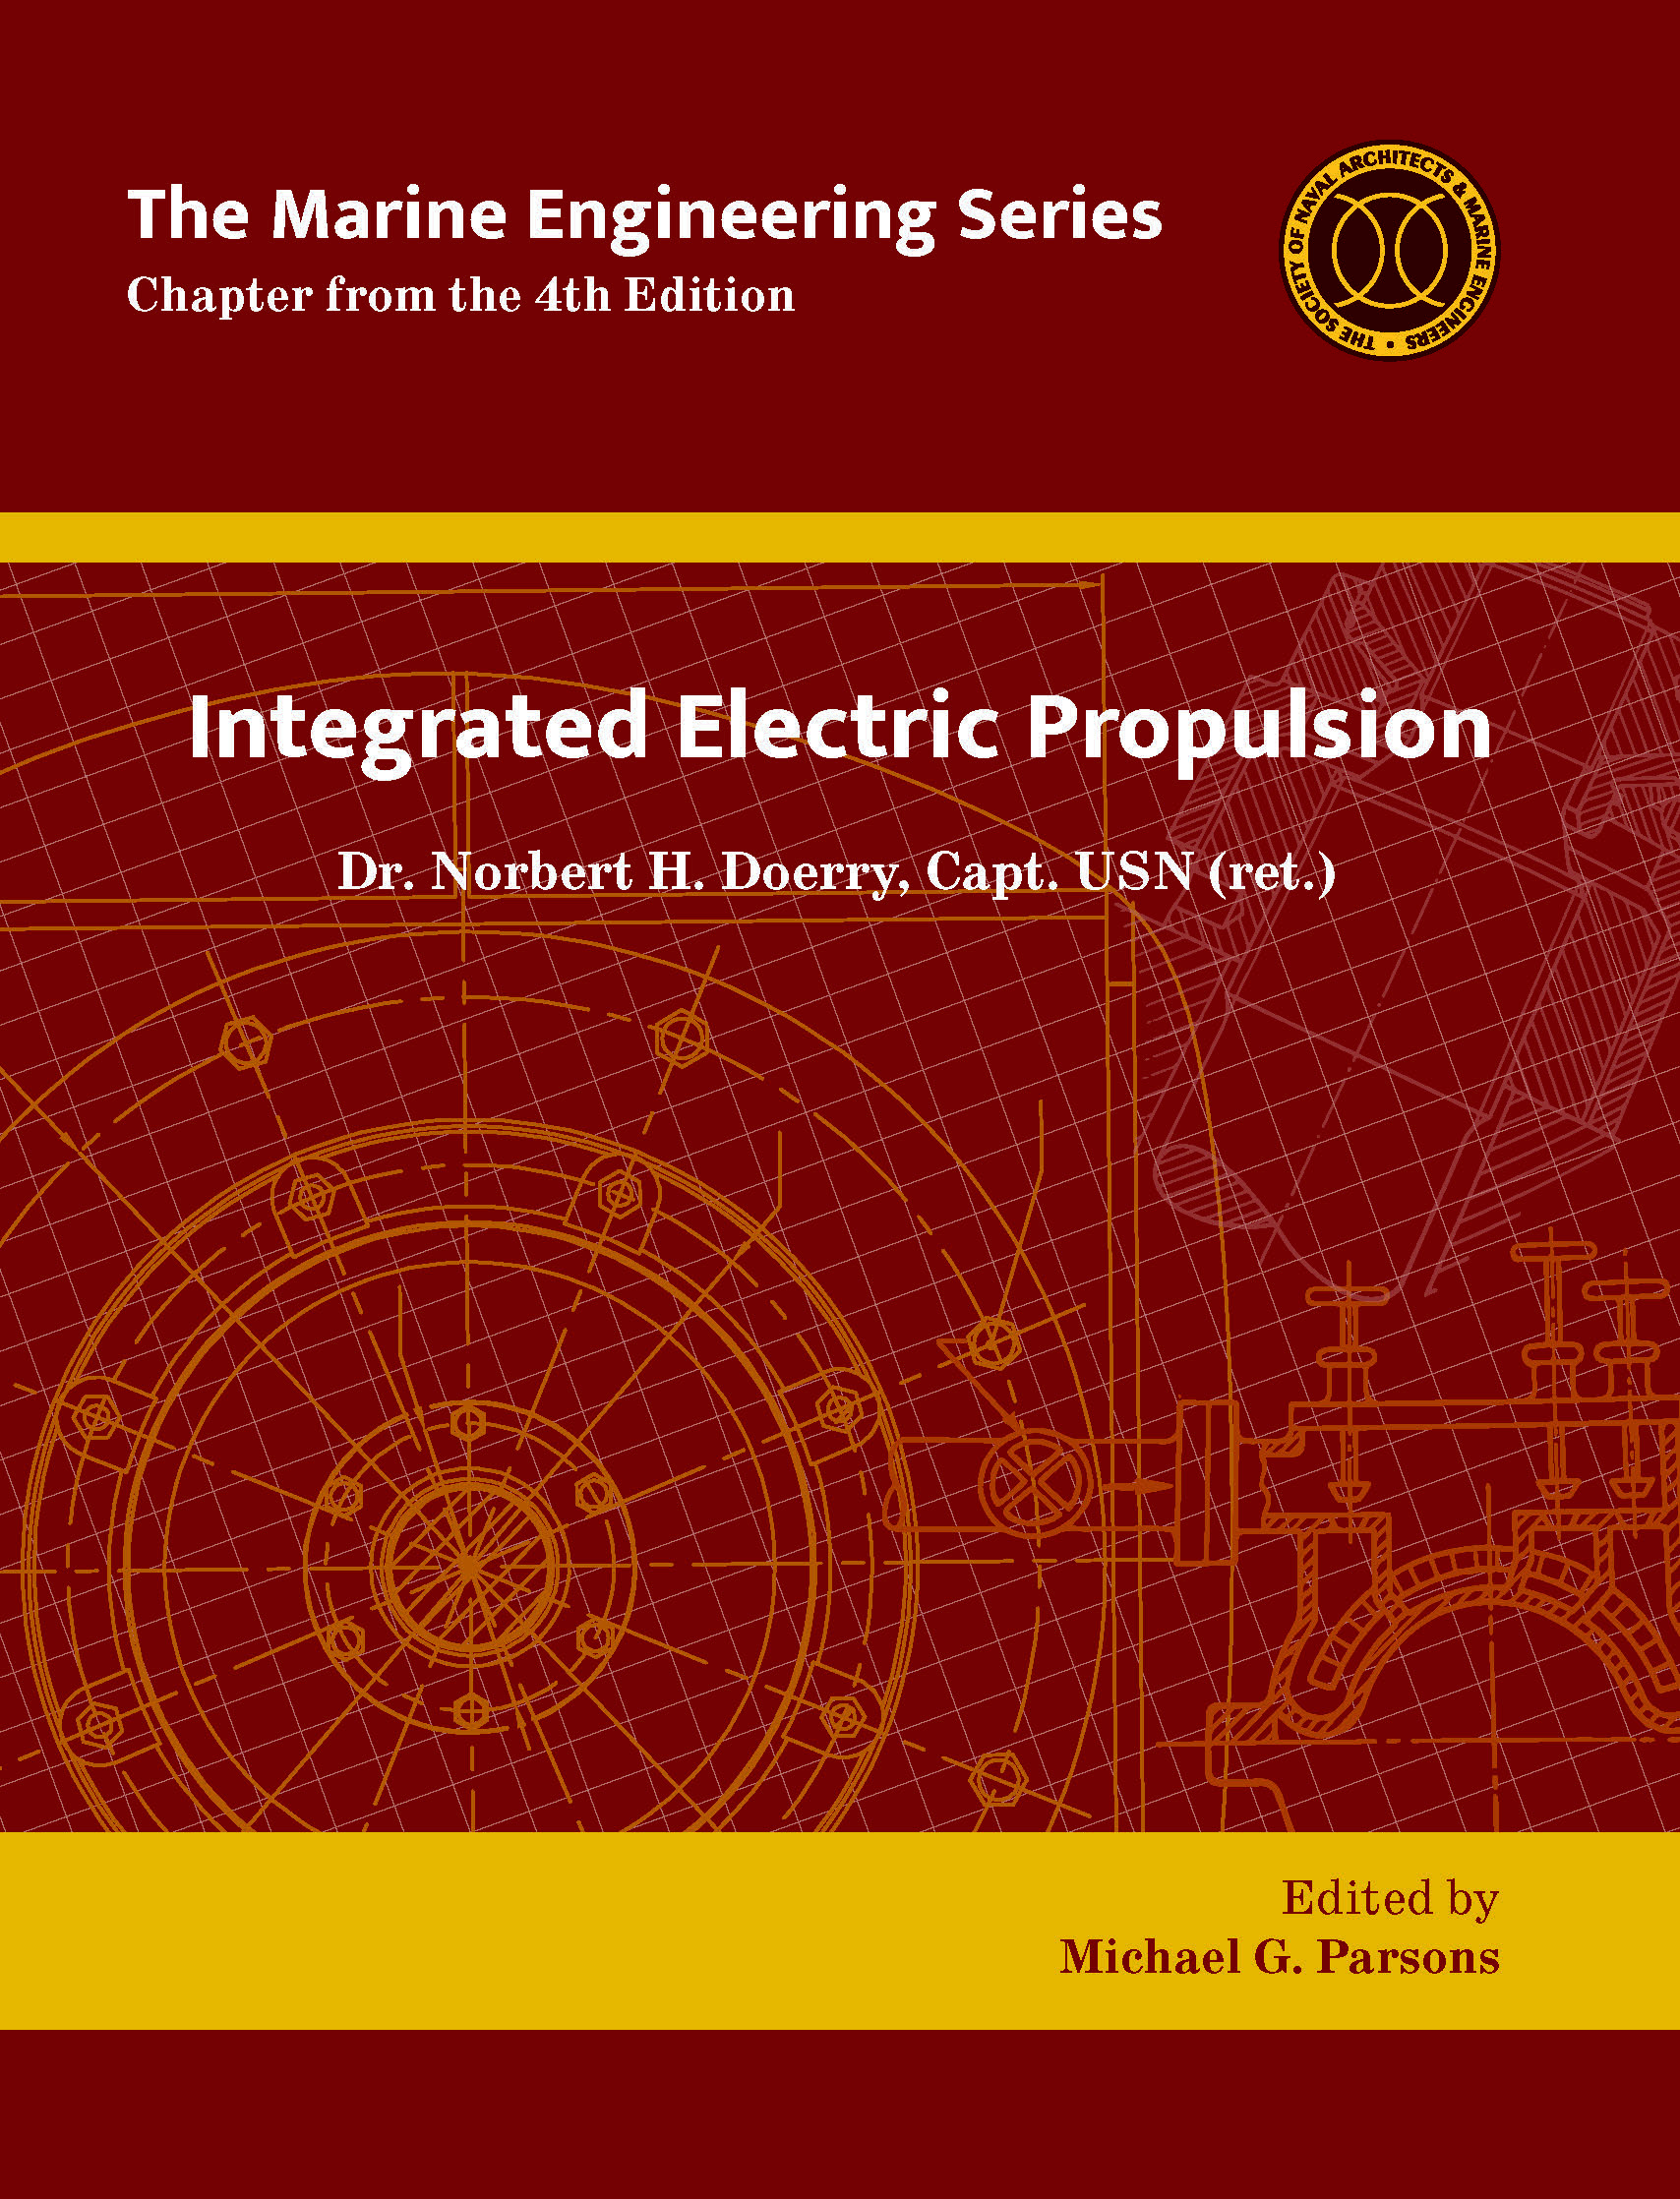 Marine Engineering Series: Integrated Electric Propulsion